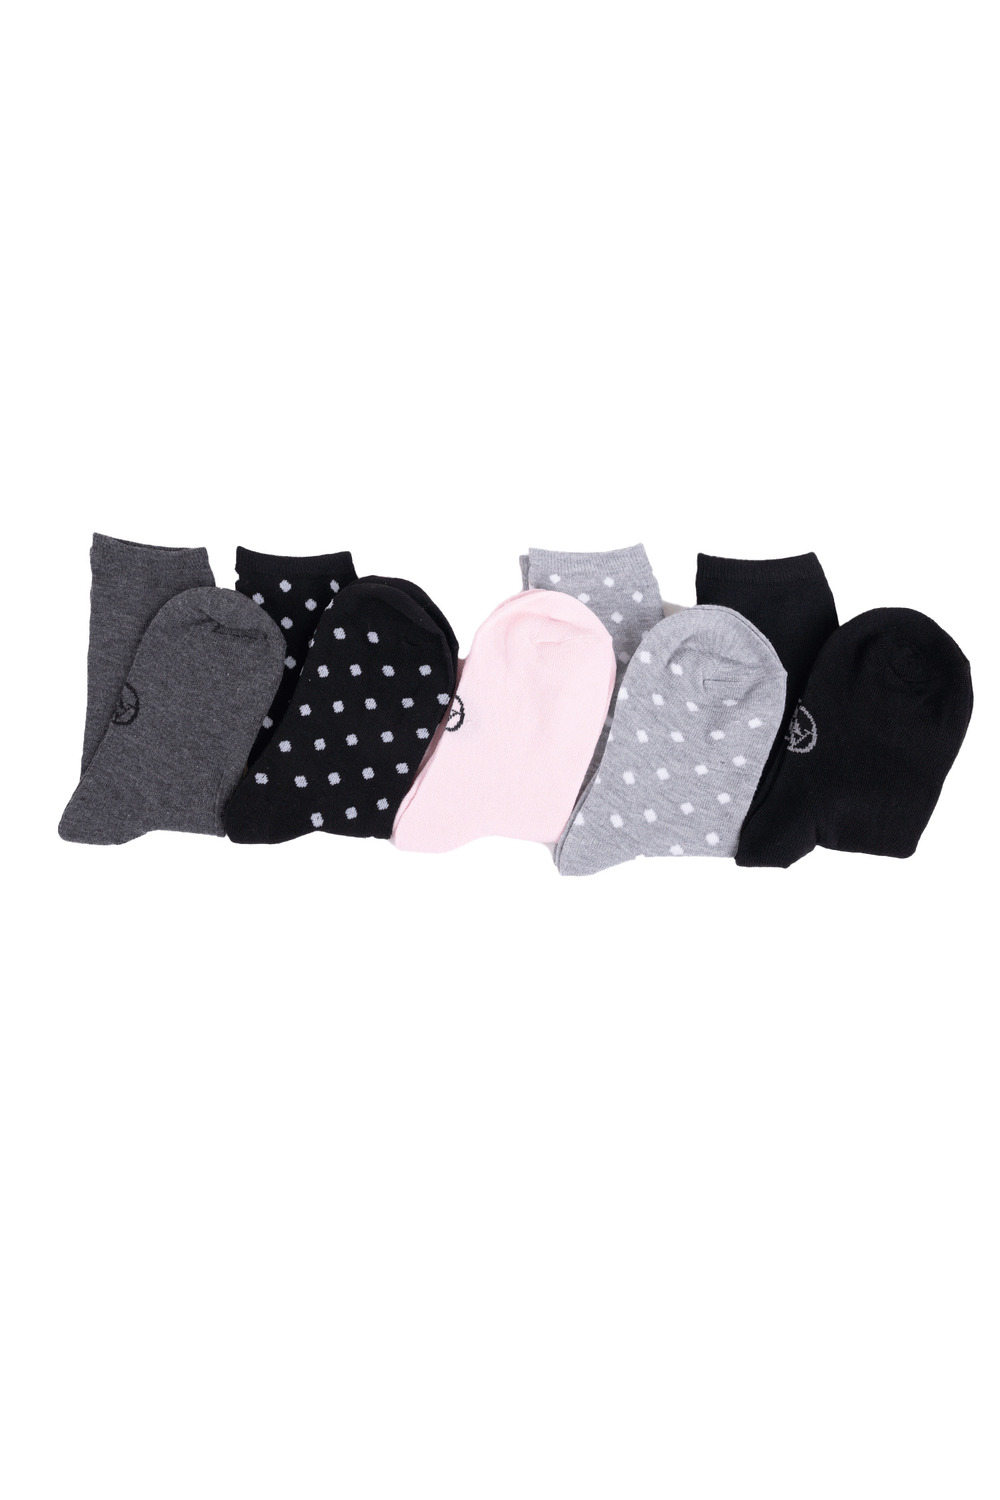 Adrienne Vittadini - Fine-knit cotton dress socks - 5 pairs. Colour: grey.  Size: 9-11